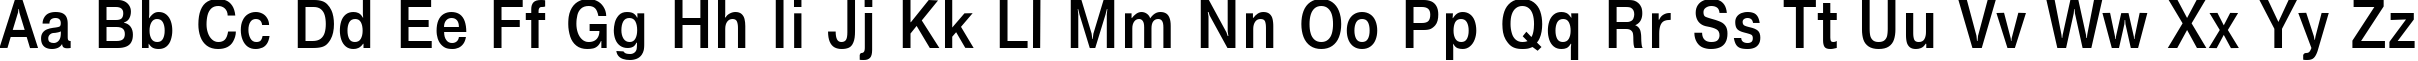 Пример написания английского алфавита шрифтом NTHarmonica Bold90b